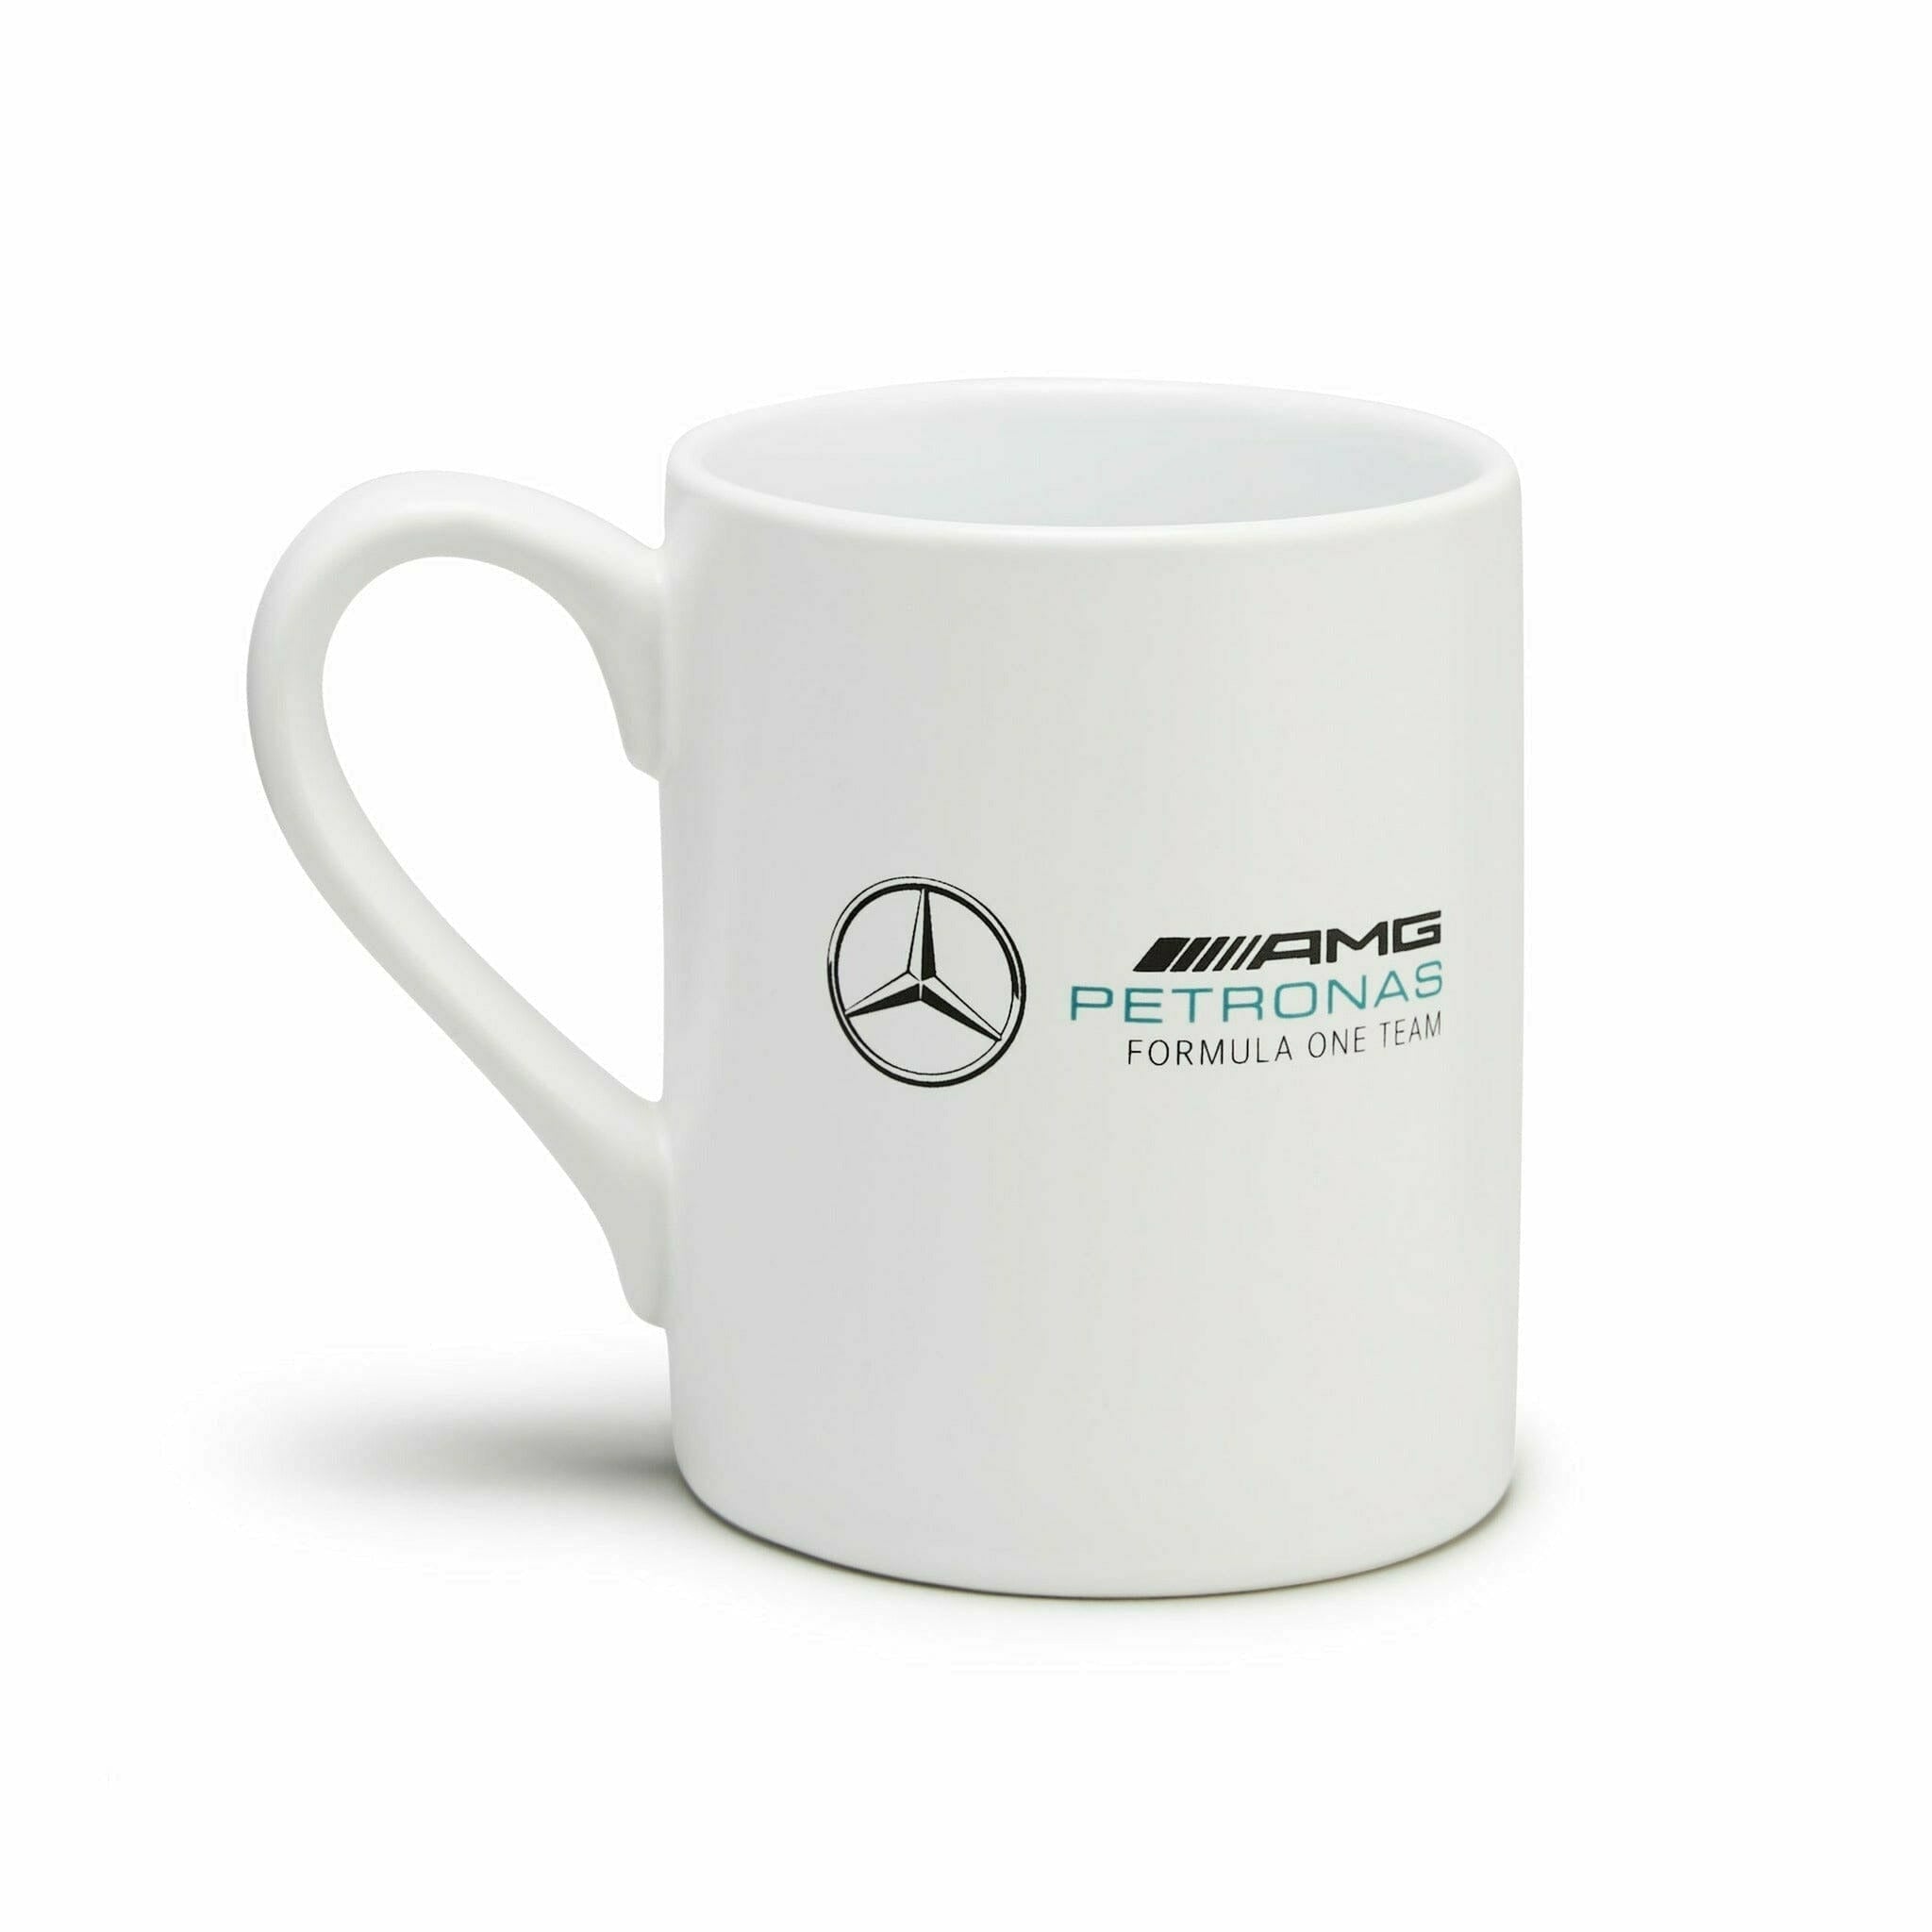 Mercedes Benz Coffee Mugs